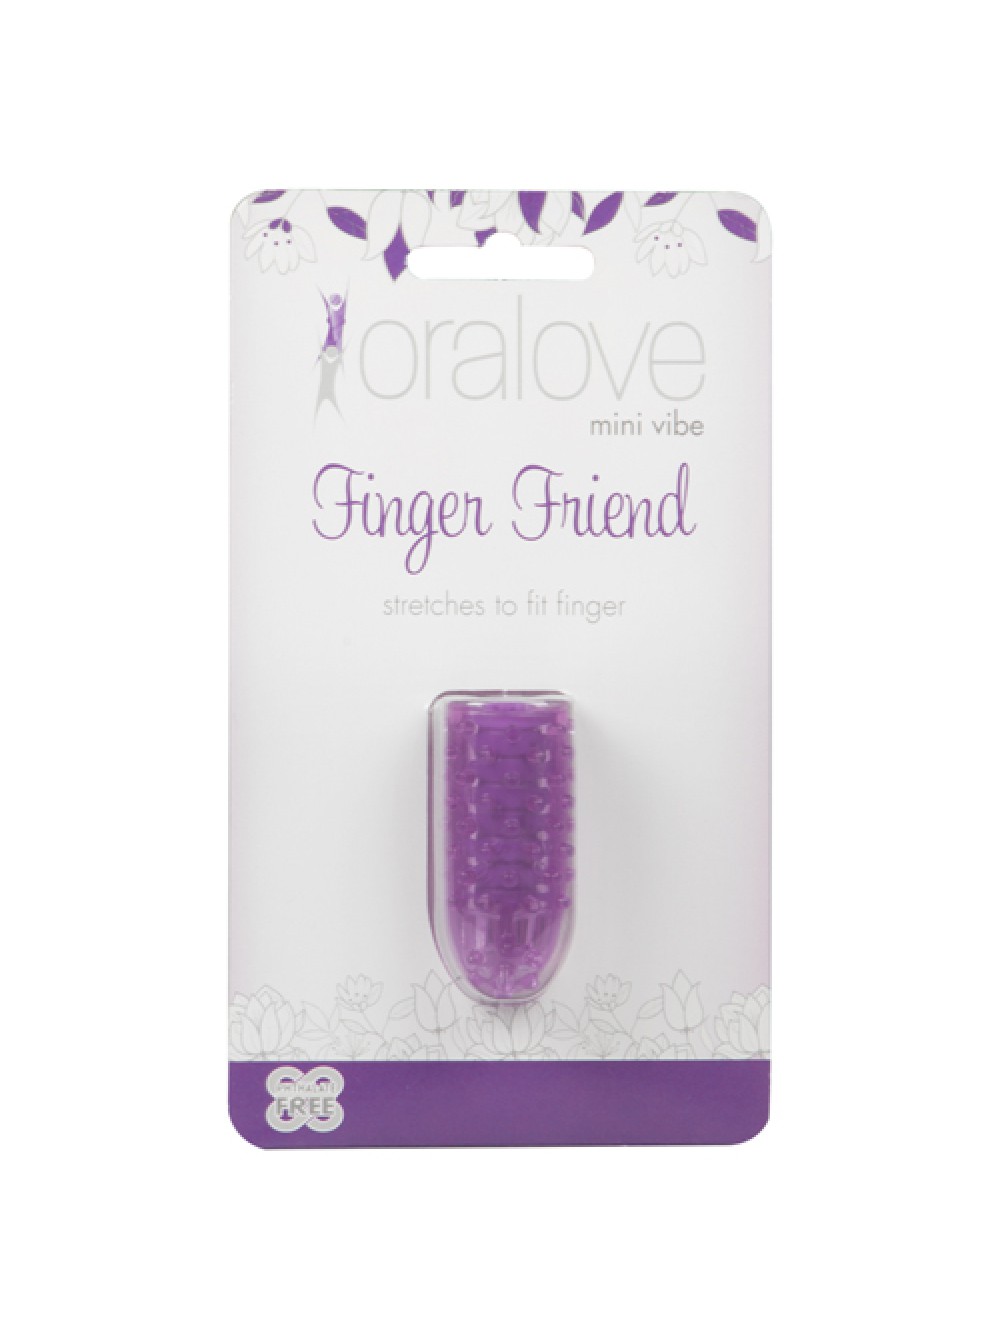 Oralove - Finger Friend